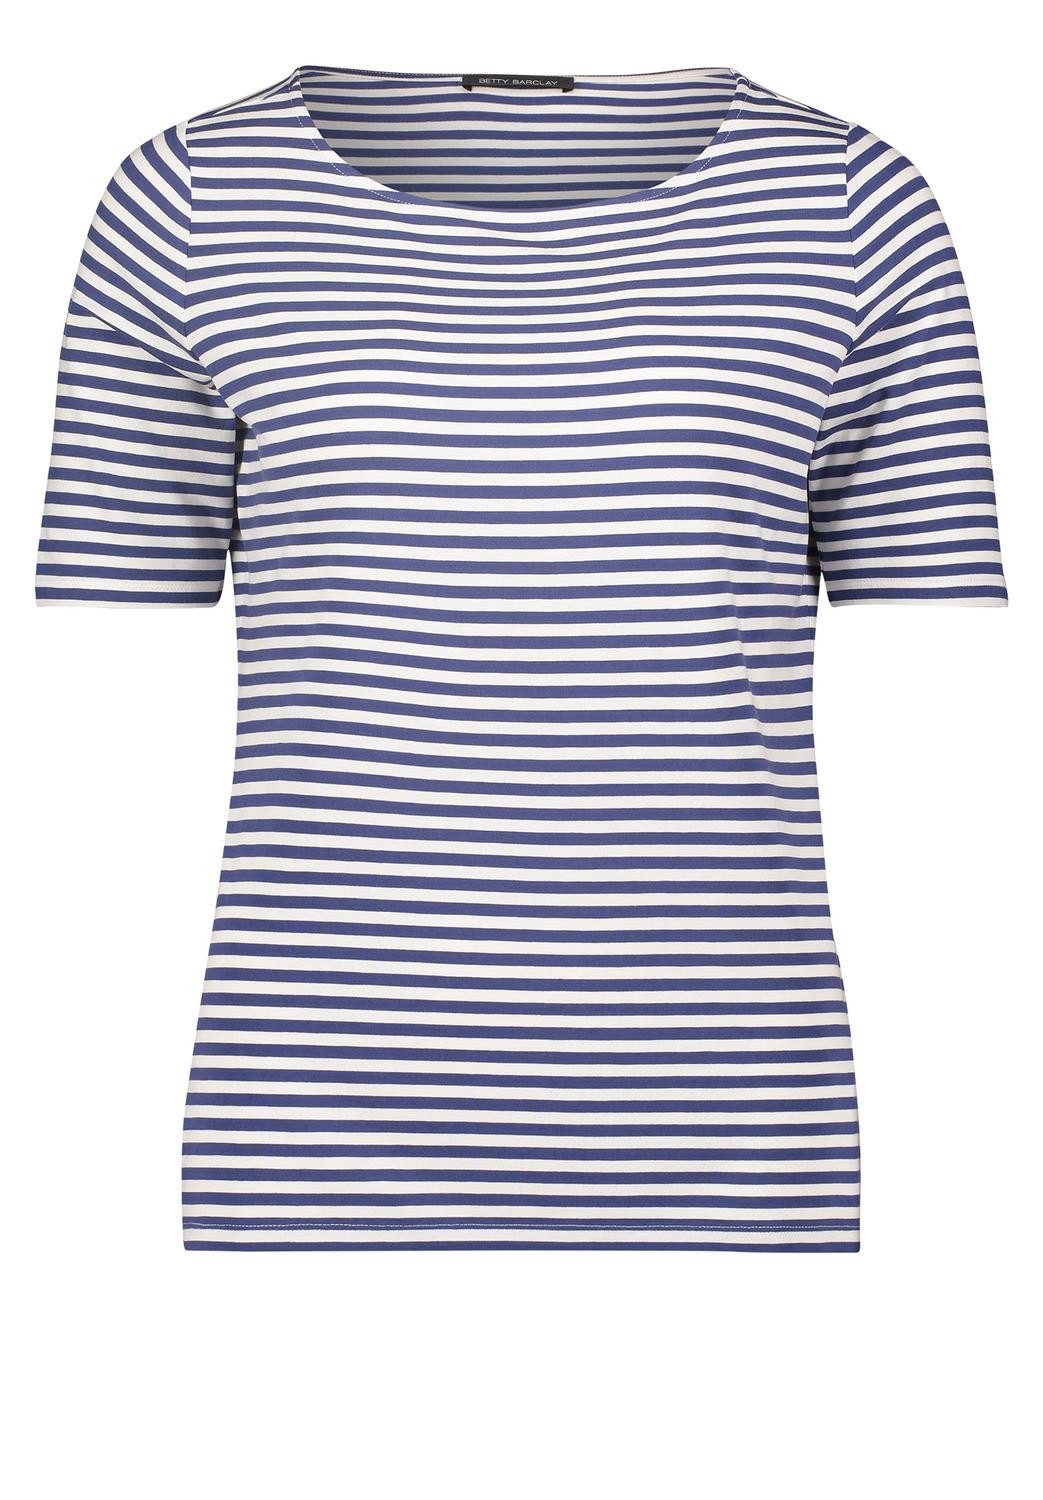 Betty Barclay T-Shirt Shirt Kurz 1/2 Arm, Dark Blue/Cream